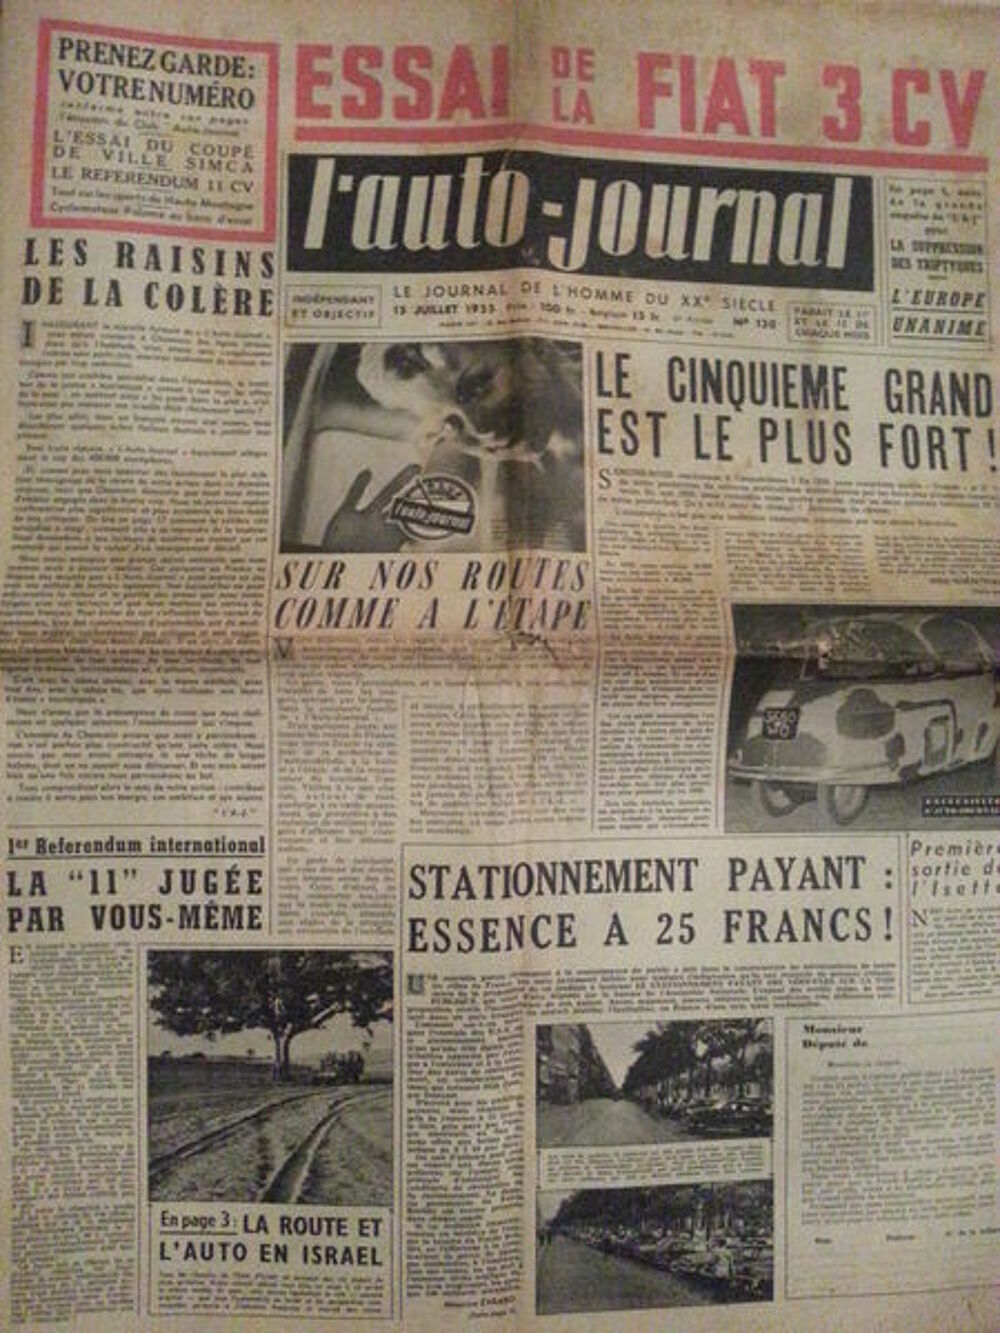 auto journal fiat 600 15 juillet 1955 